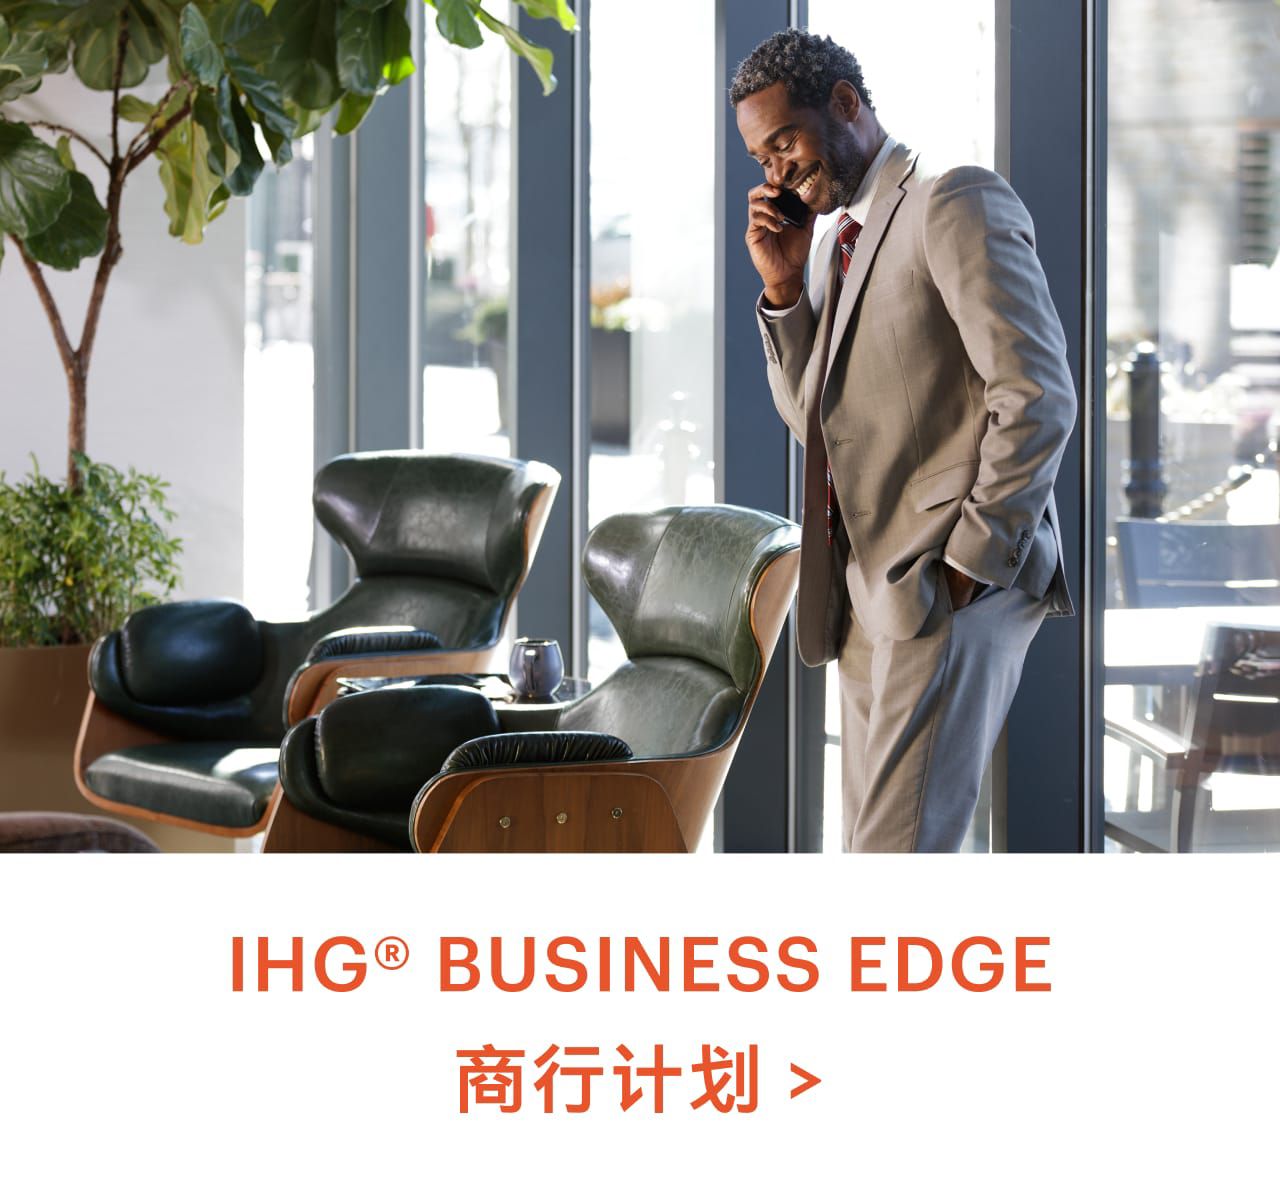 IHG Business Edge